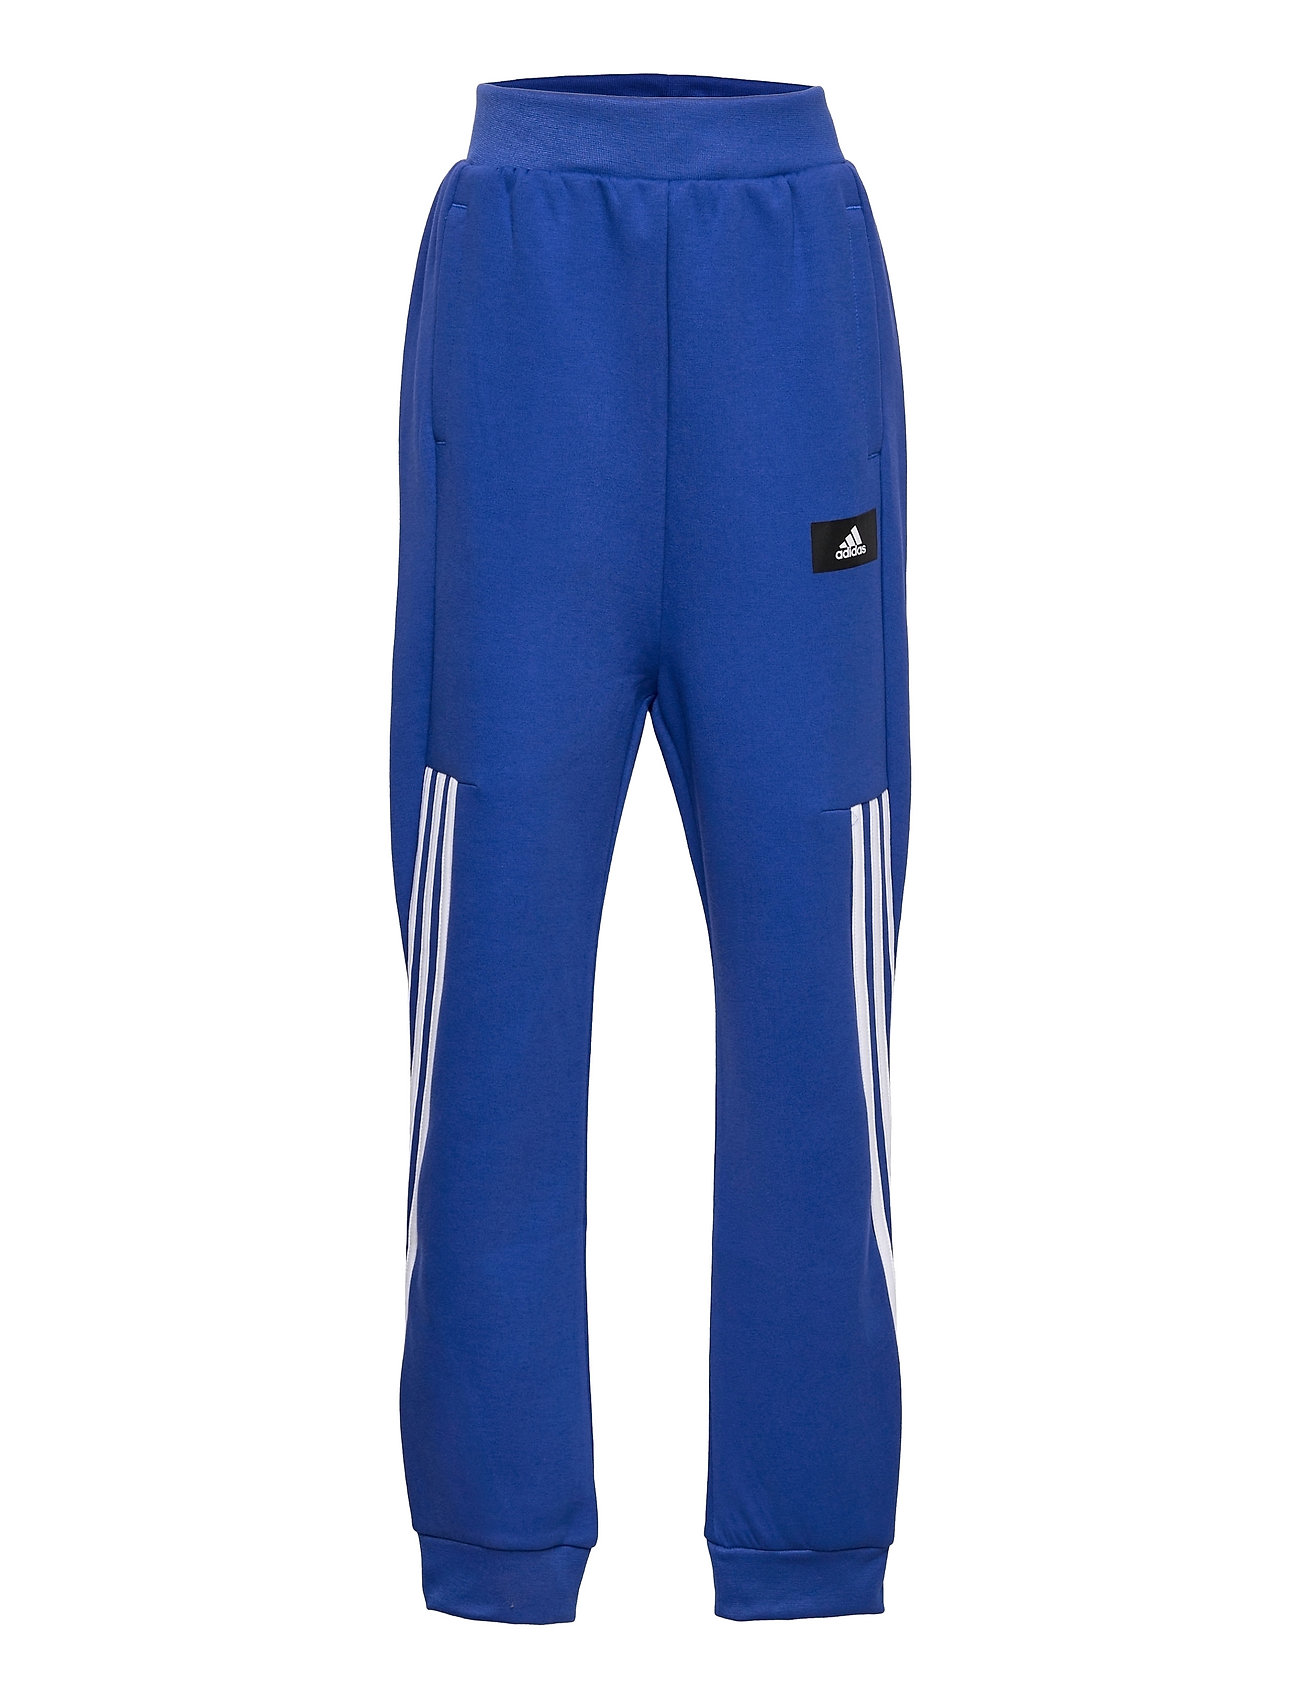 Future Icons 3-Stripes Tapered-Leg Pants Collegehousut Olohousut Sininen Adidas Performance, adidas Performance